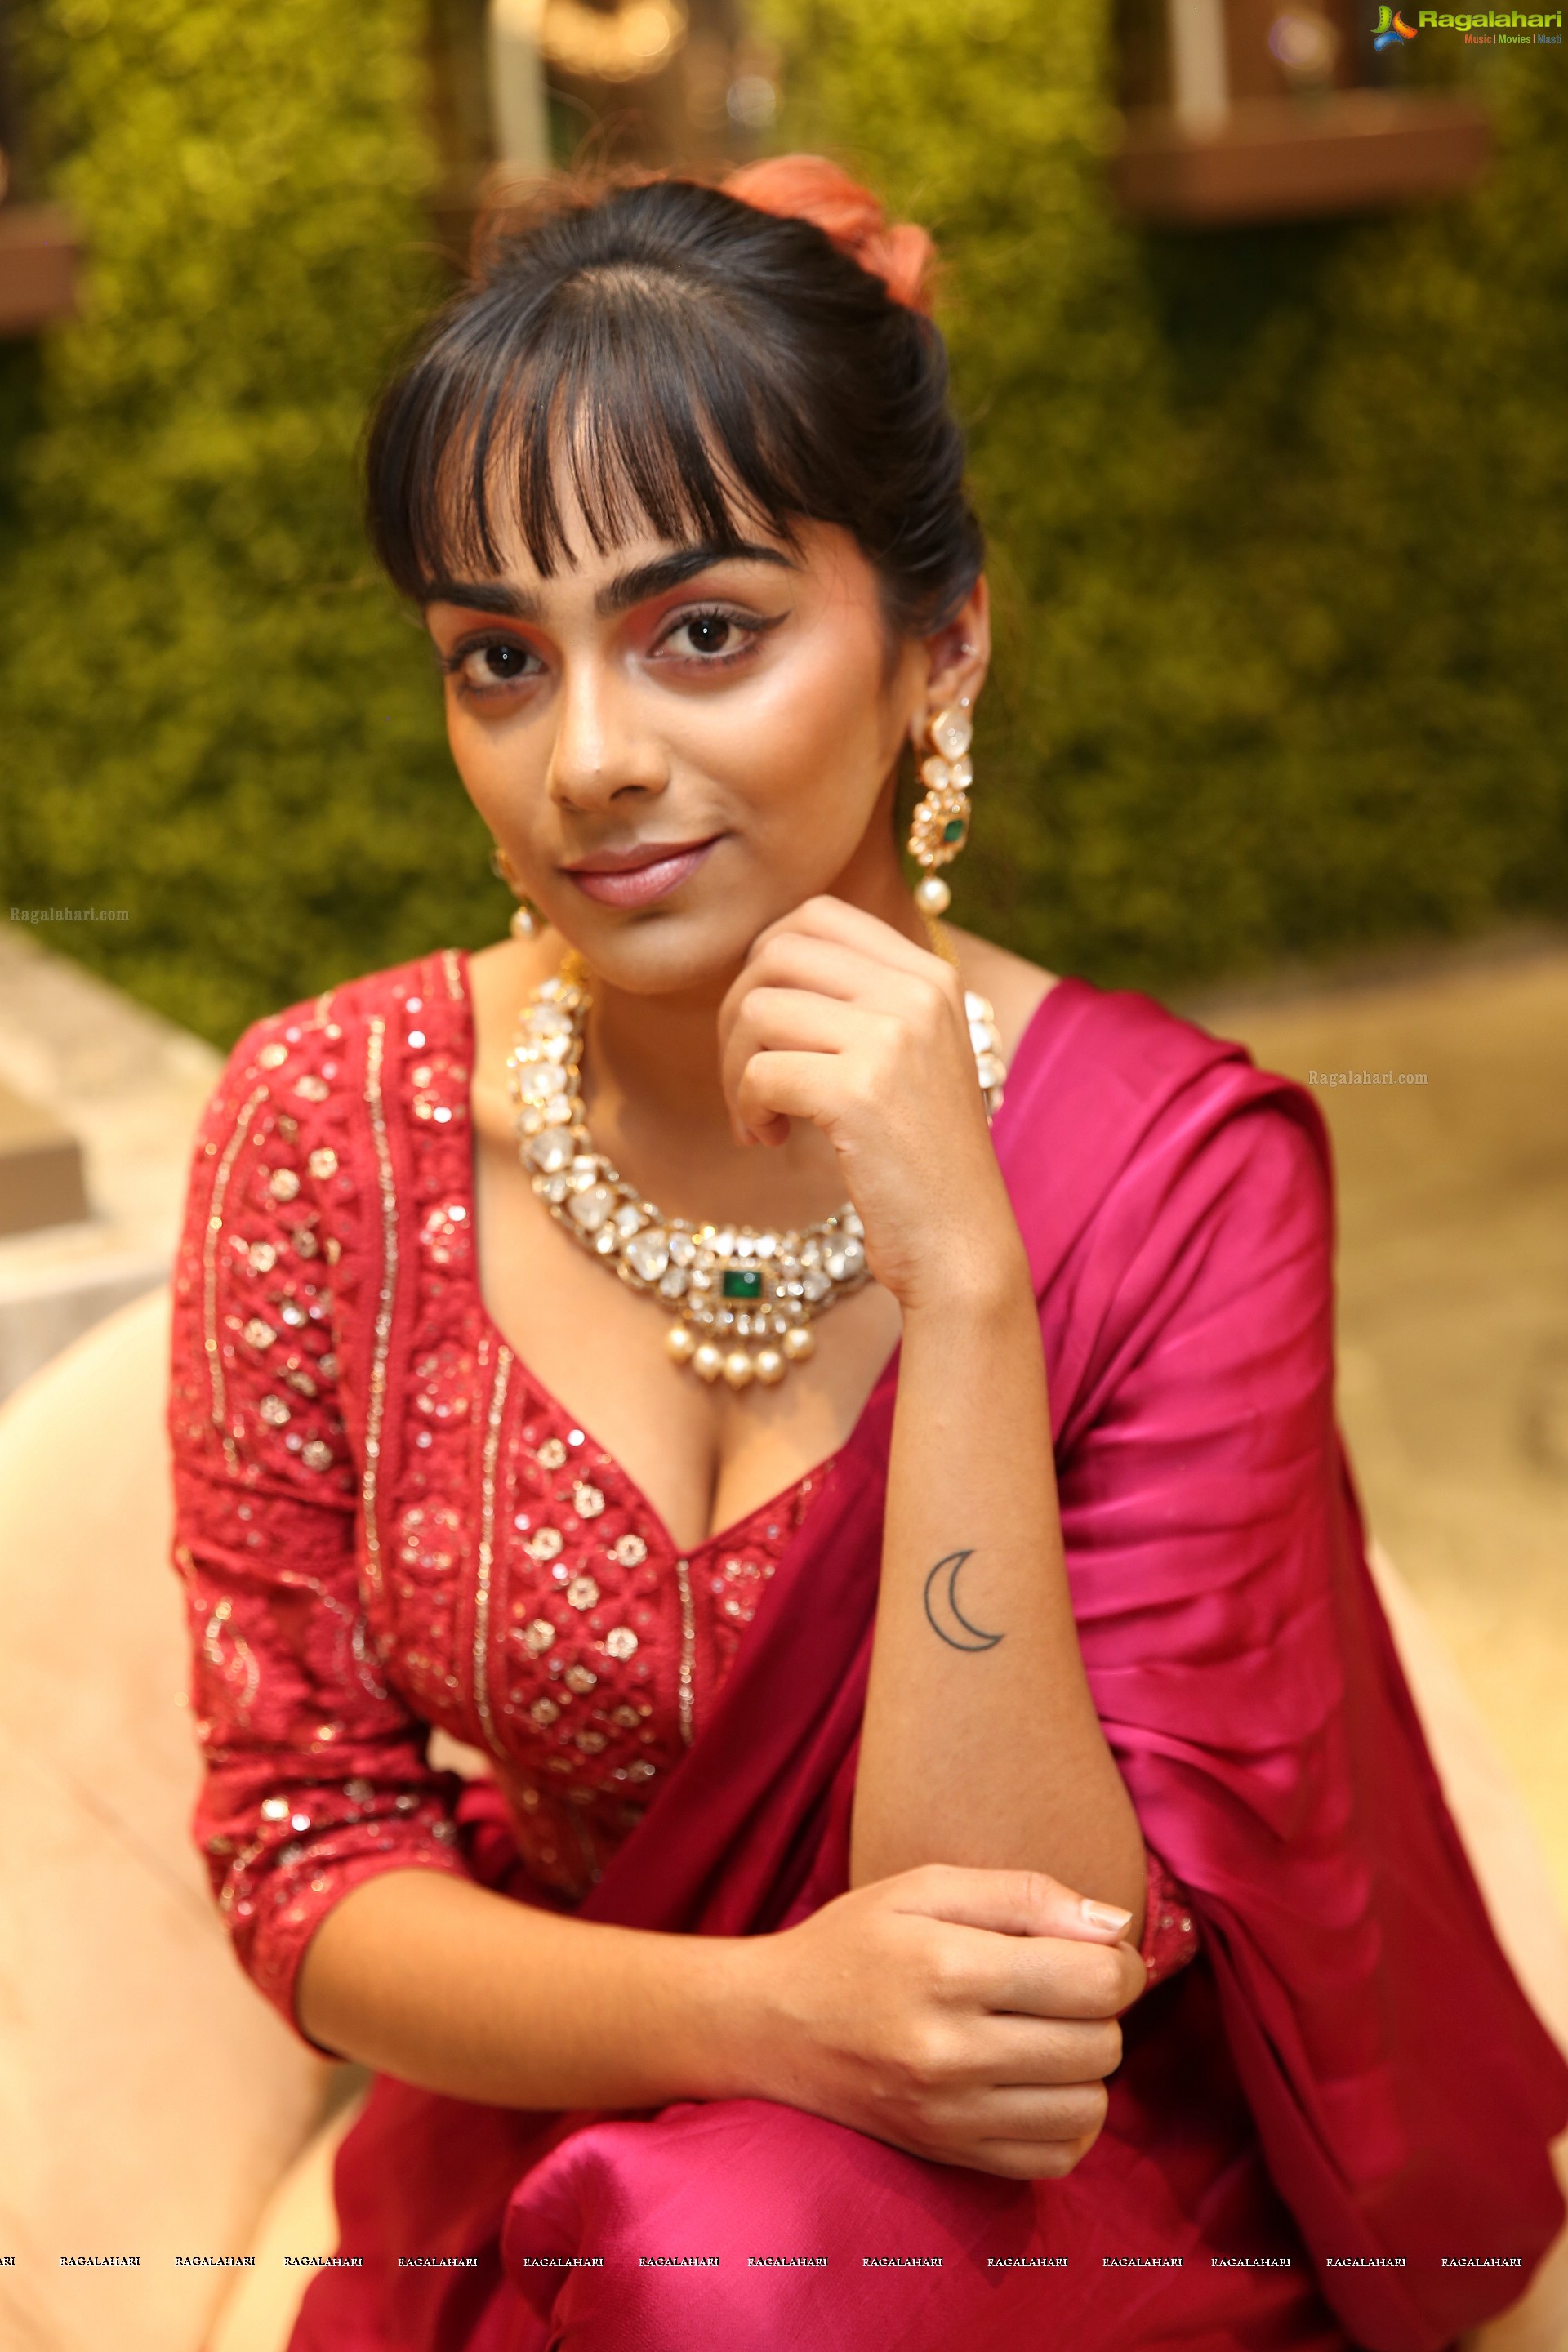 Rakshanda Kolhe (High definition) @ Nikitha Jewellery - The 9 Shades of Women